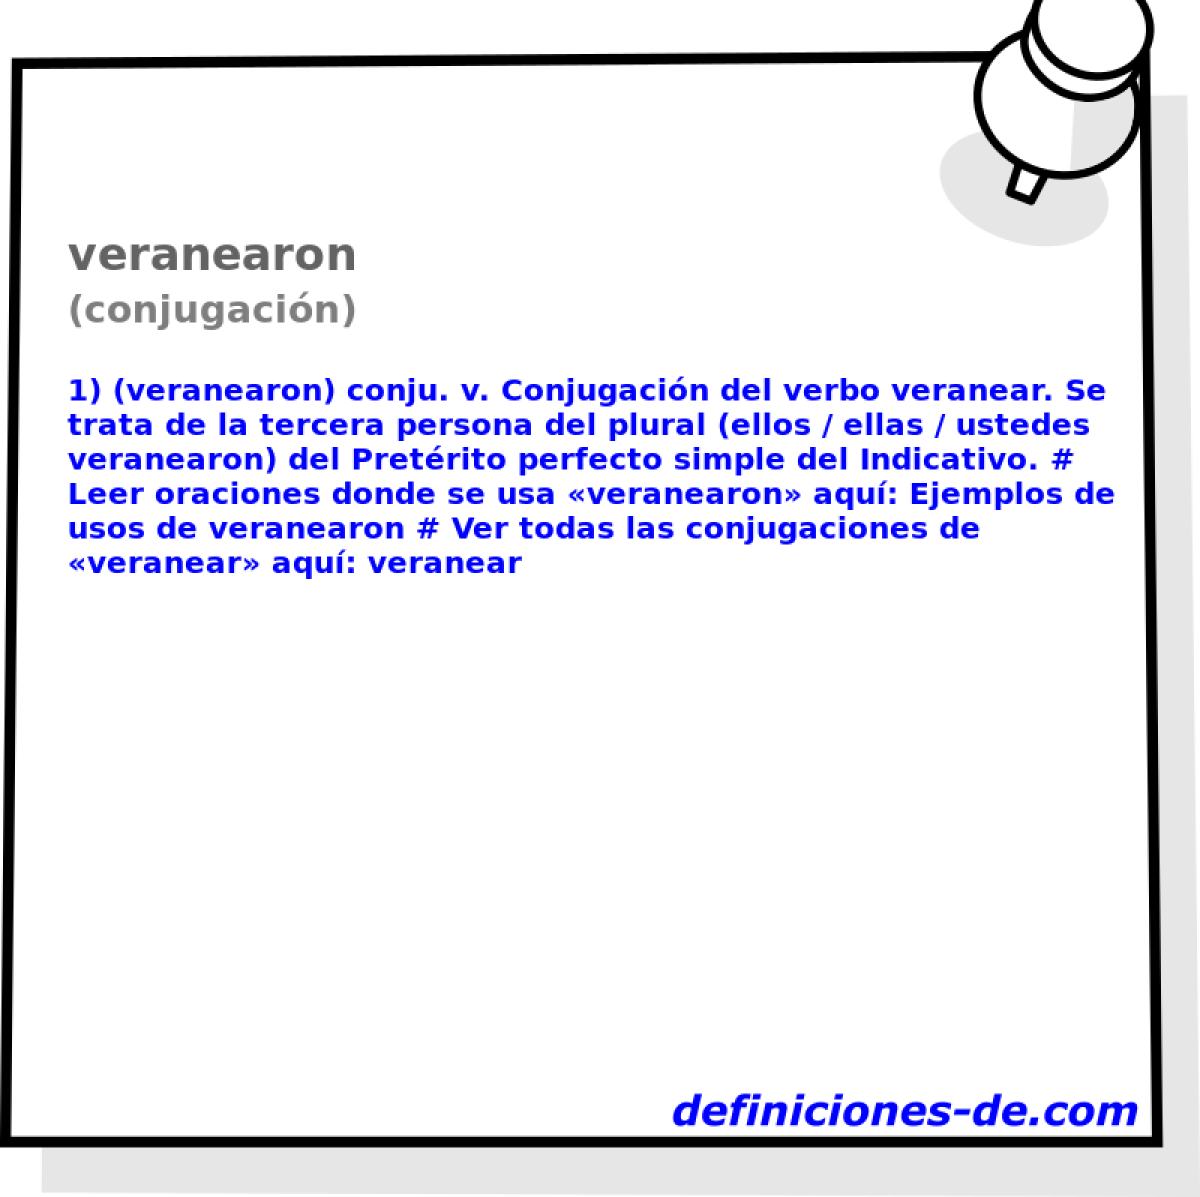 veranearon (conjugacin)